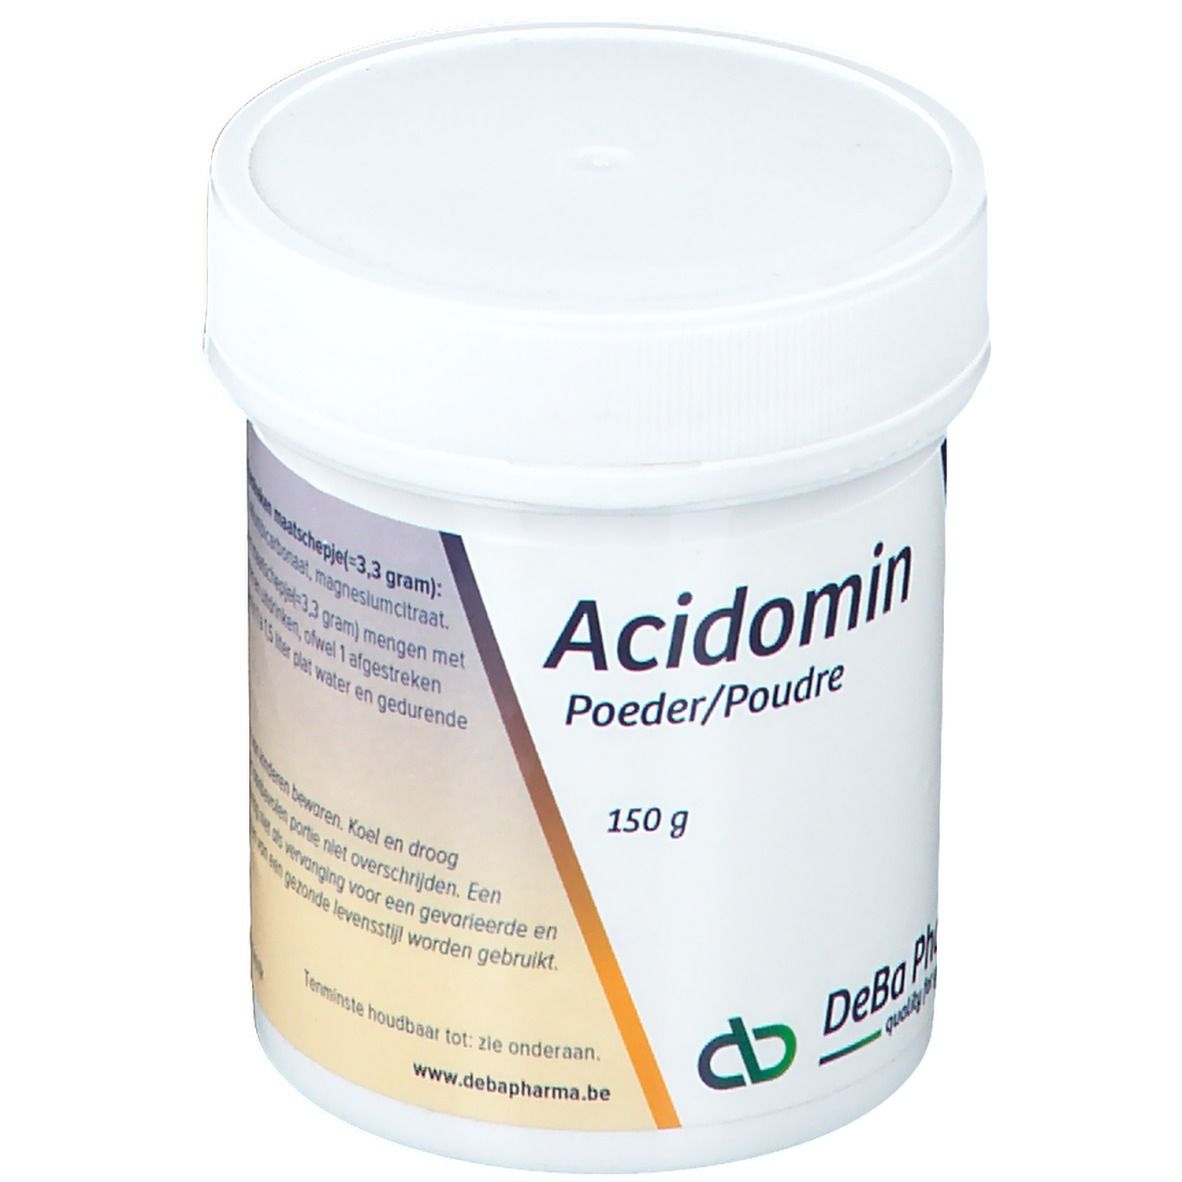 Acidomin